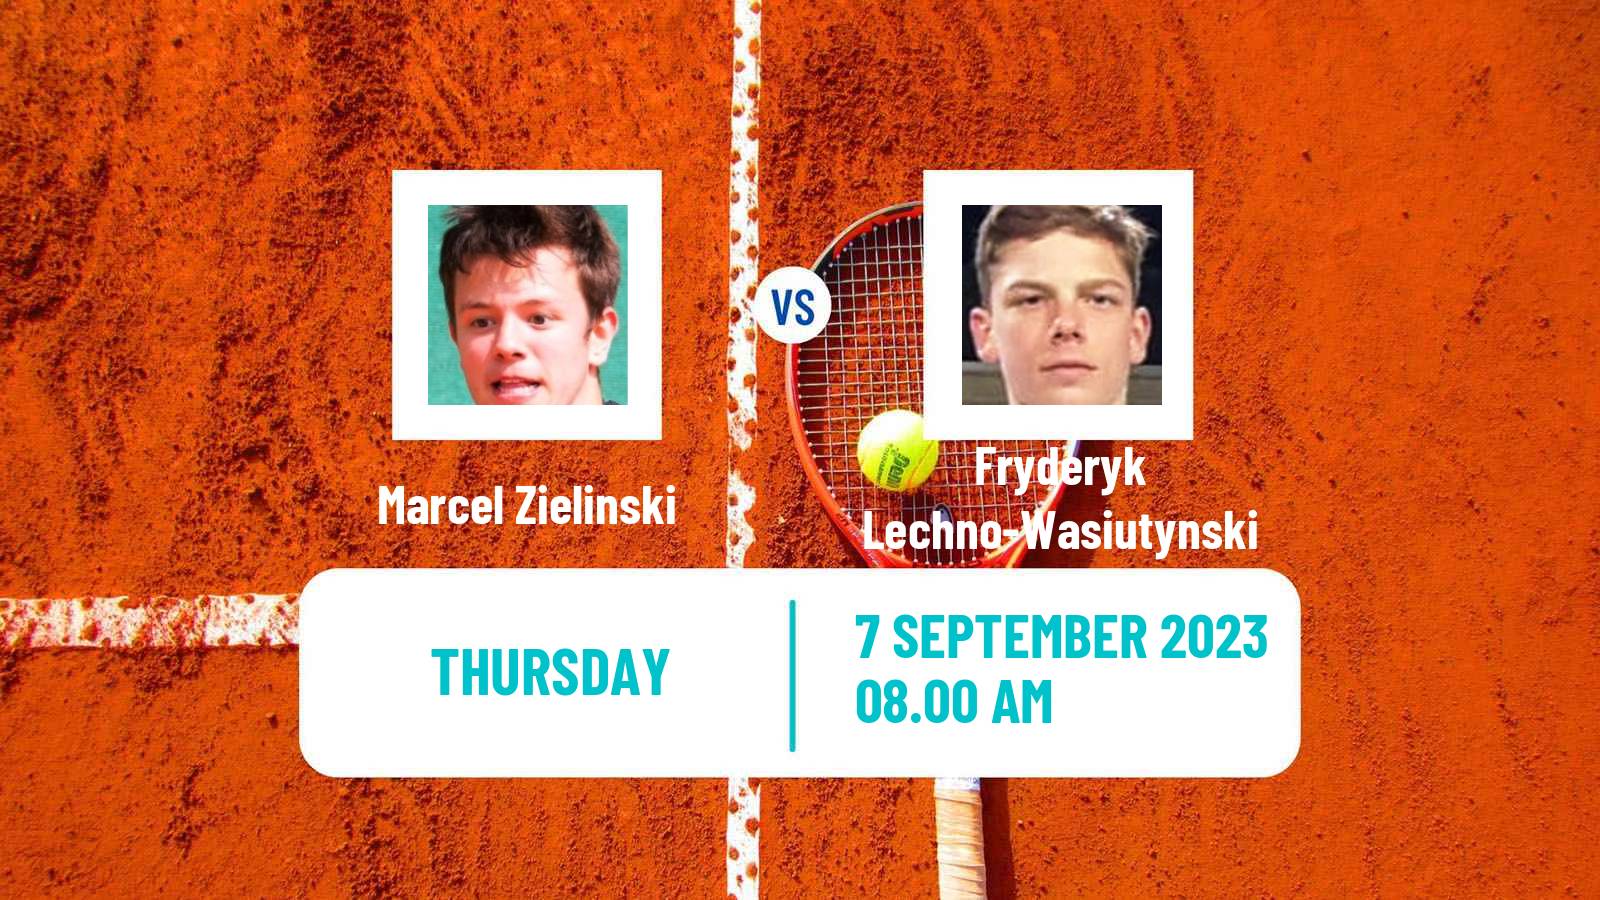 Tennis ITF M15 Koszalin Men Marcel Zielinski - Fryderyk Lechno-Wasiutynski